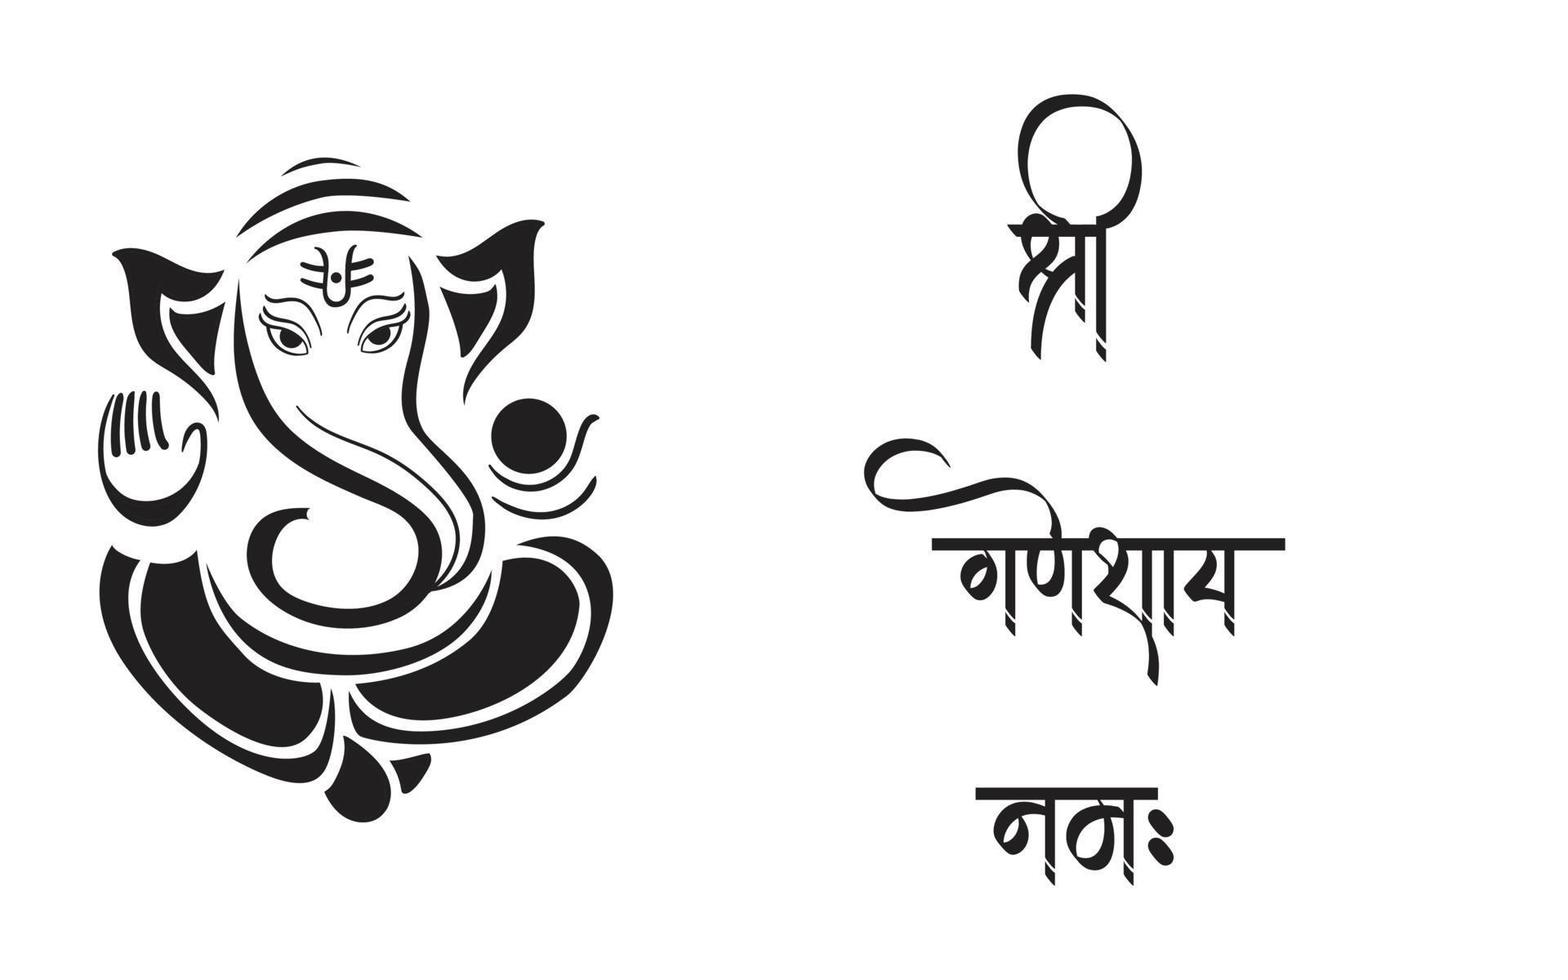 Ganpati Black and white illustration, happy Ganesh chaturthi. vector